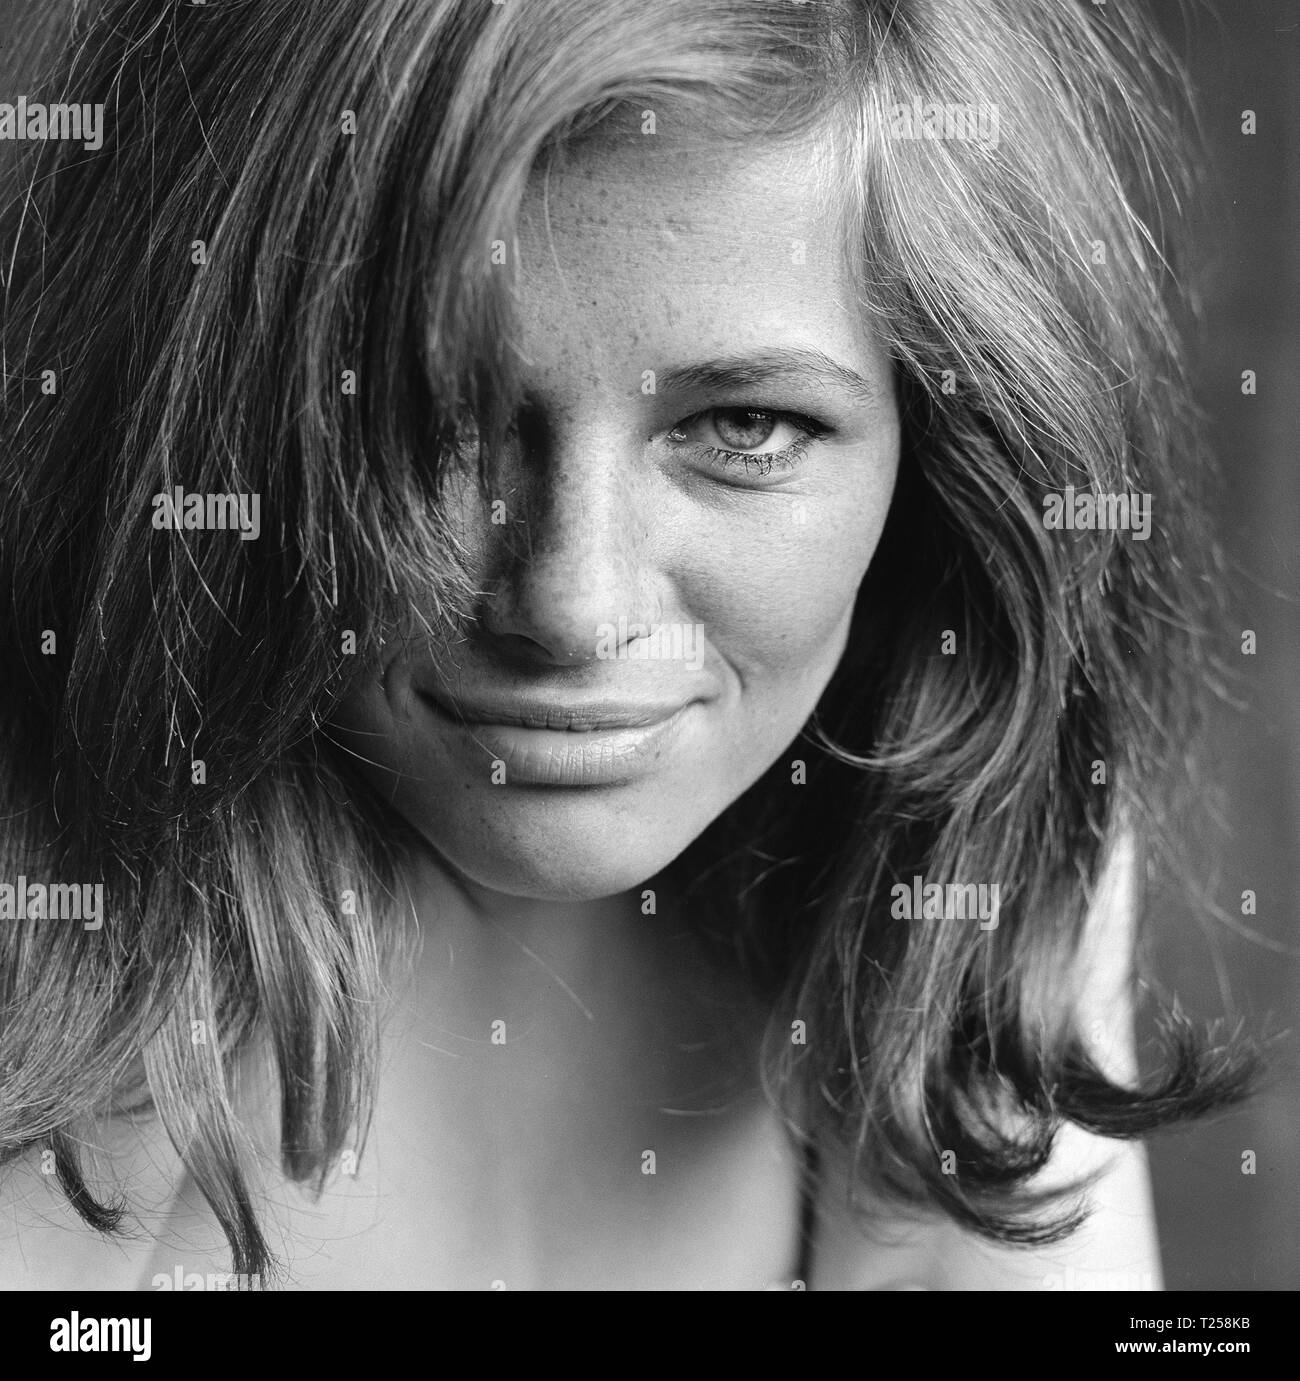 Rotten to the Core (1965) Charlotte Rampling, Date: 1965 Stock Photo - Alamy